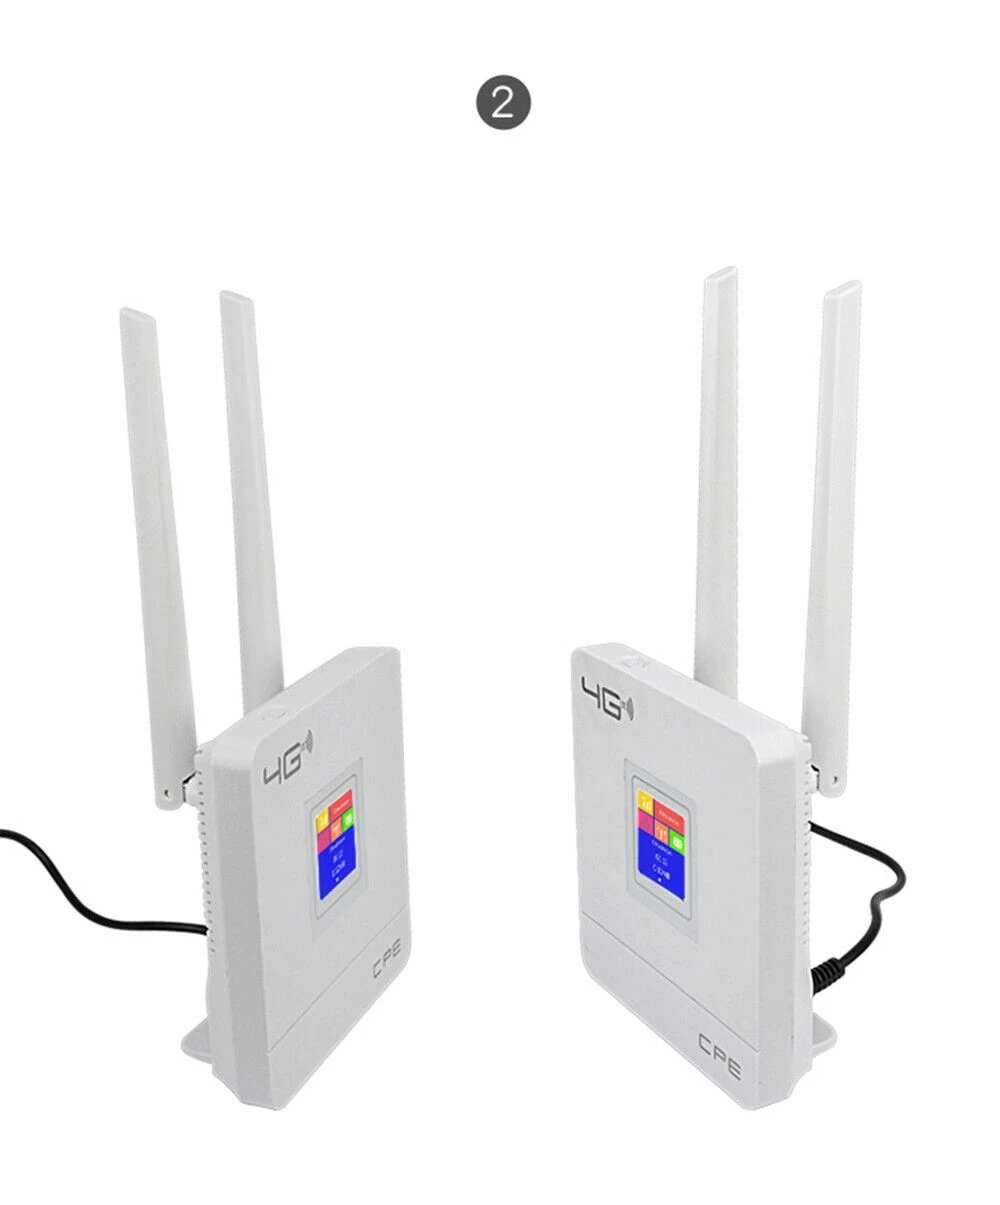 Cpe 4g wi fi. 4g Wi-Fi роутер cpe903. 4g LTE CPE WIFI роутер. Cpe903 4g Wi-Fi. 4g CPE 4g WIFI Router CPE 903.